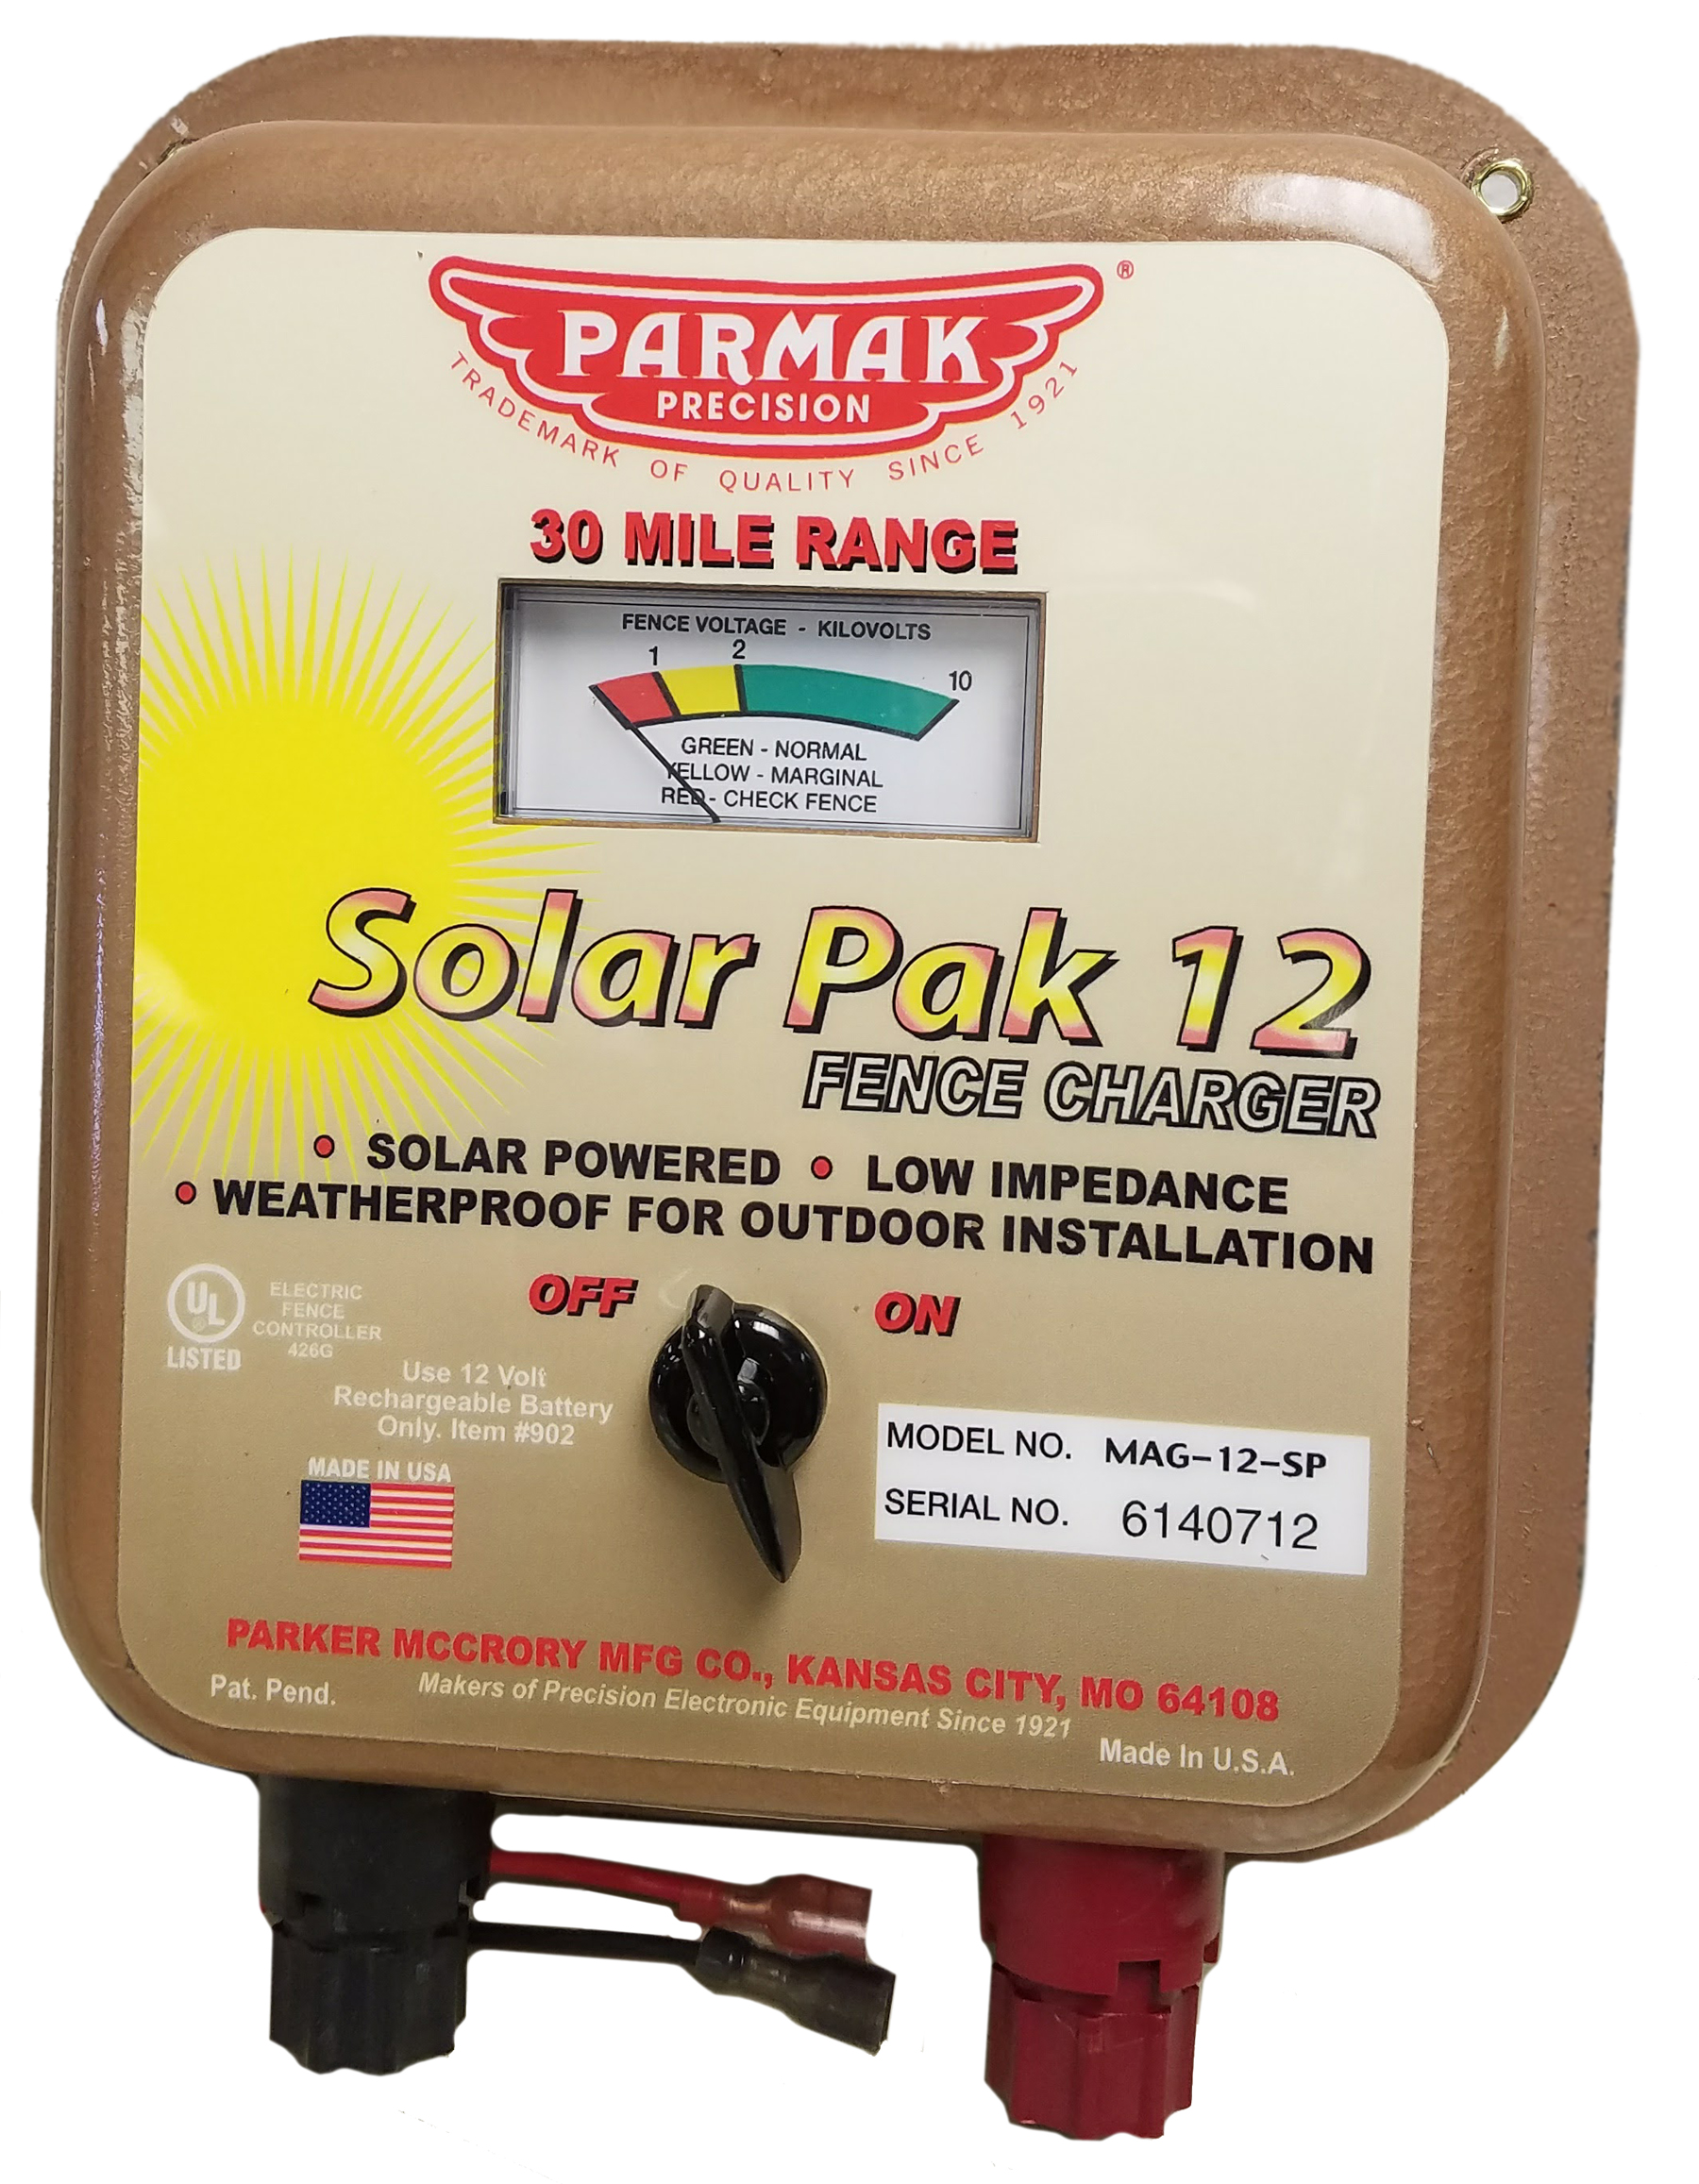 Parmak Solar Powered Electric Fence Charger Magnum Solar-Pak 12 MAG12-SP 30 Mile 